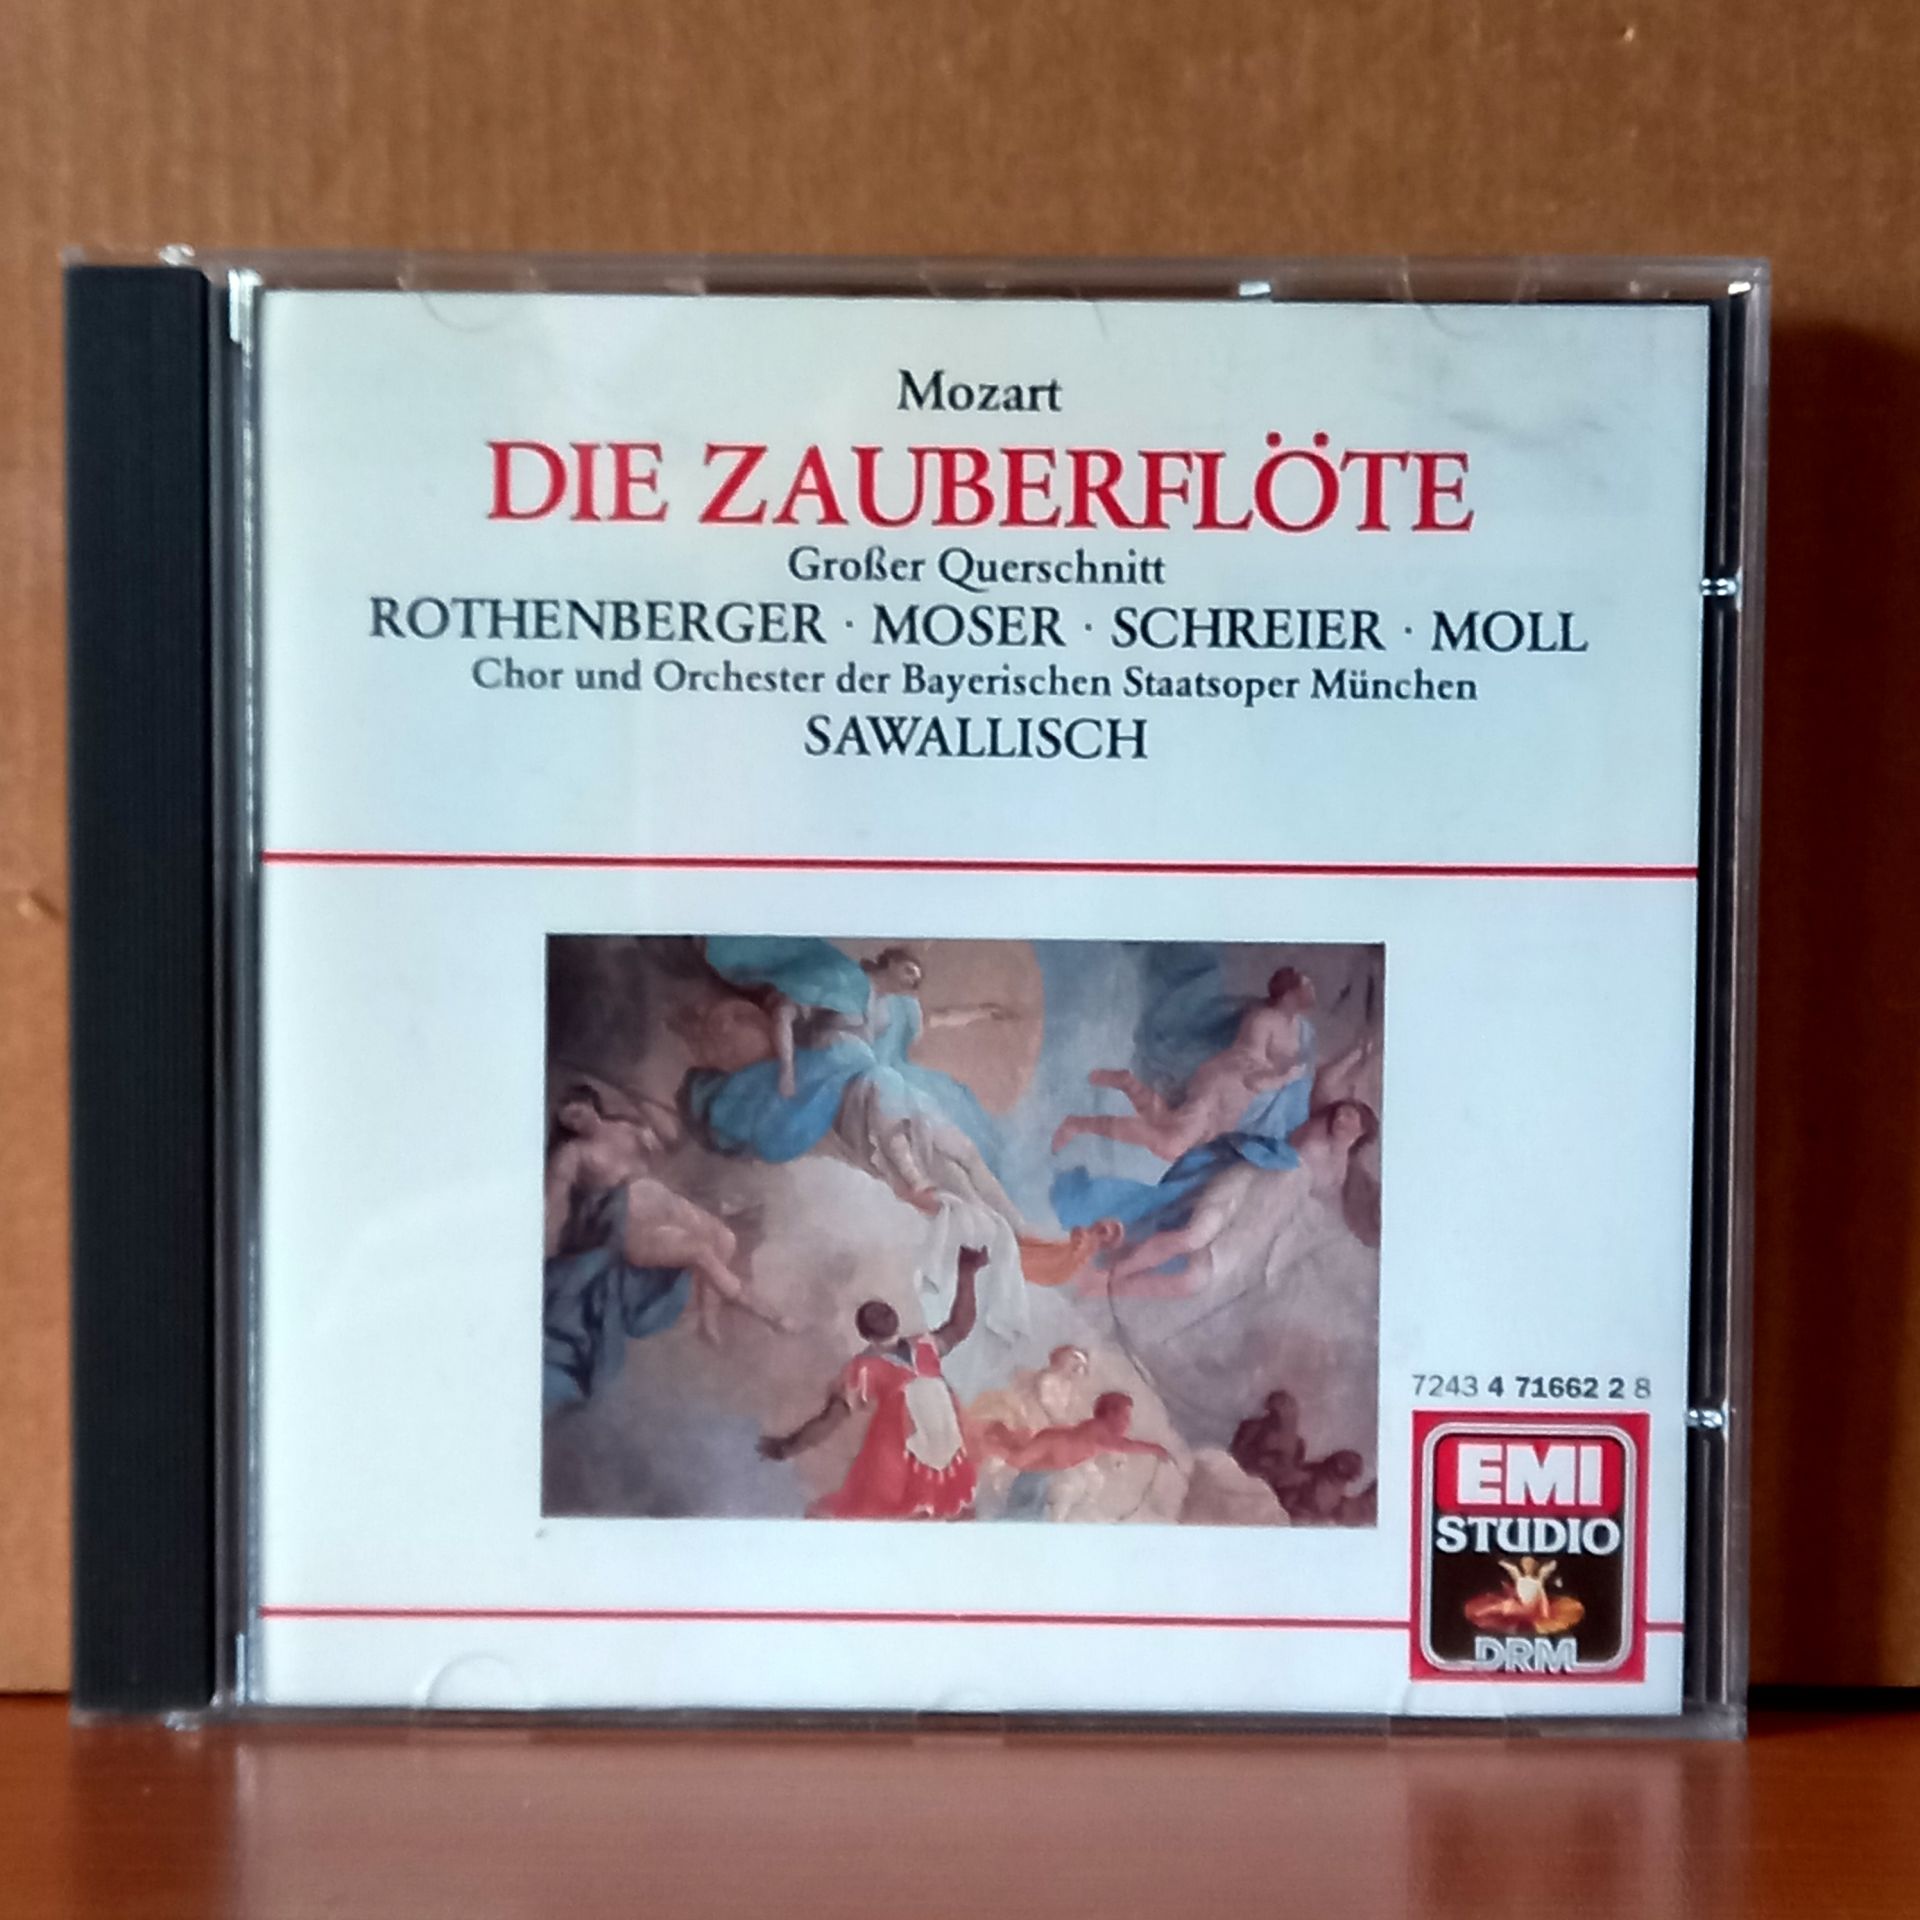 MOZART: DIE ZAUBERFLÖTE / ROTHENBERGER, MOSER, SCHREIER, MOLL, SAWALLISCH - CD 2.EL